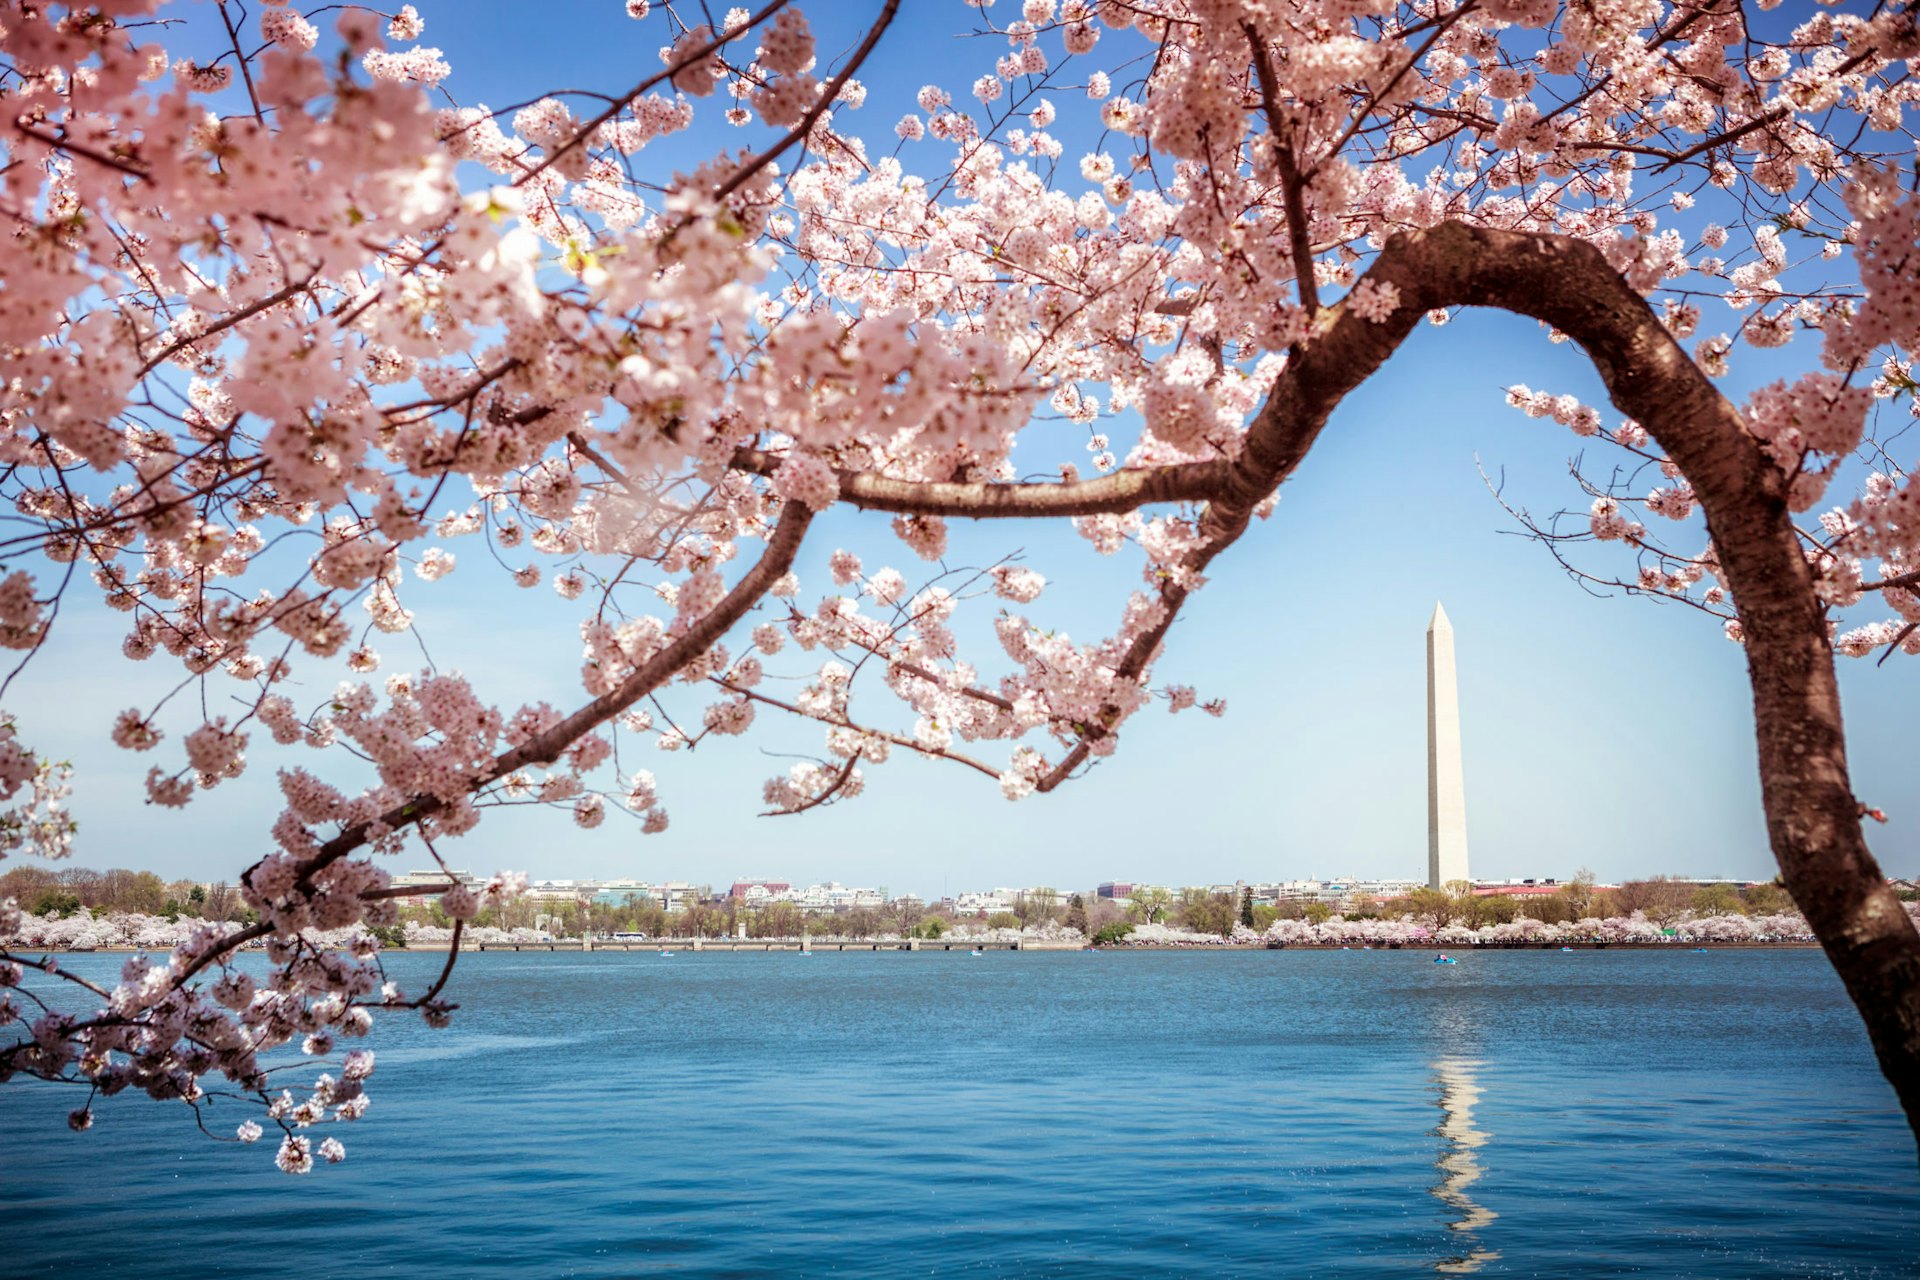 Washington Monument under Cherry Blossom Trees